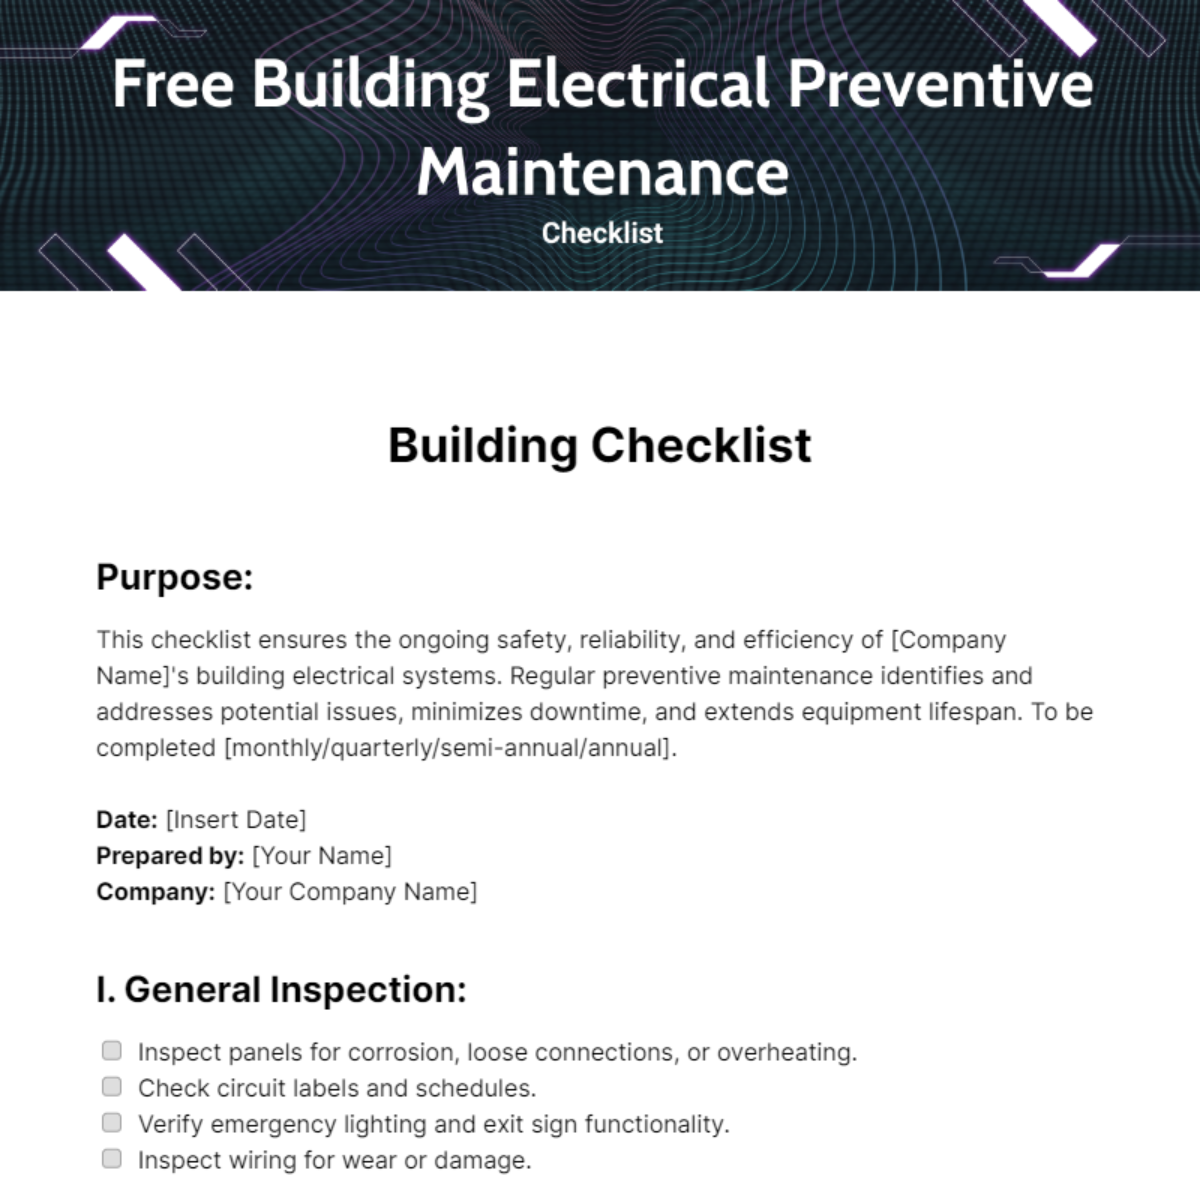 Free Building Electrical Preventive Maintenance Checklist Template